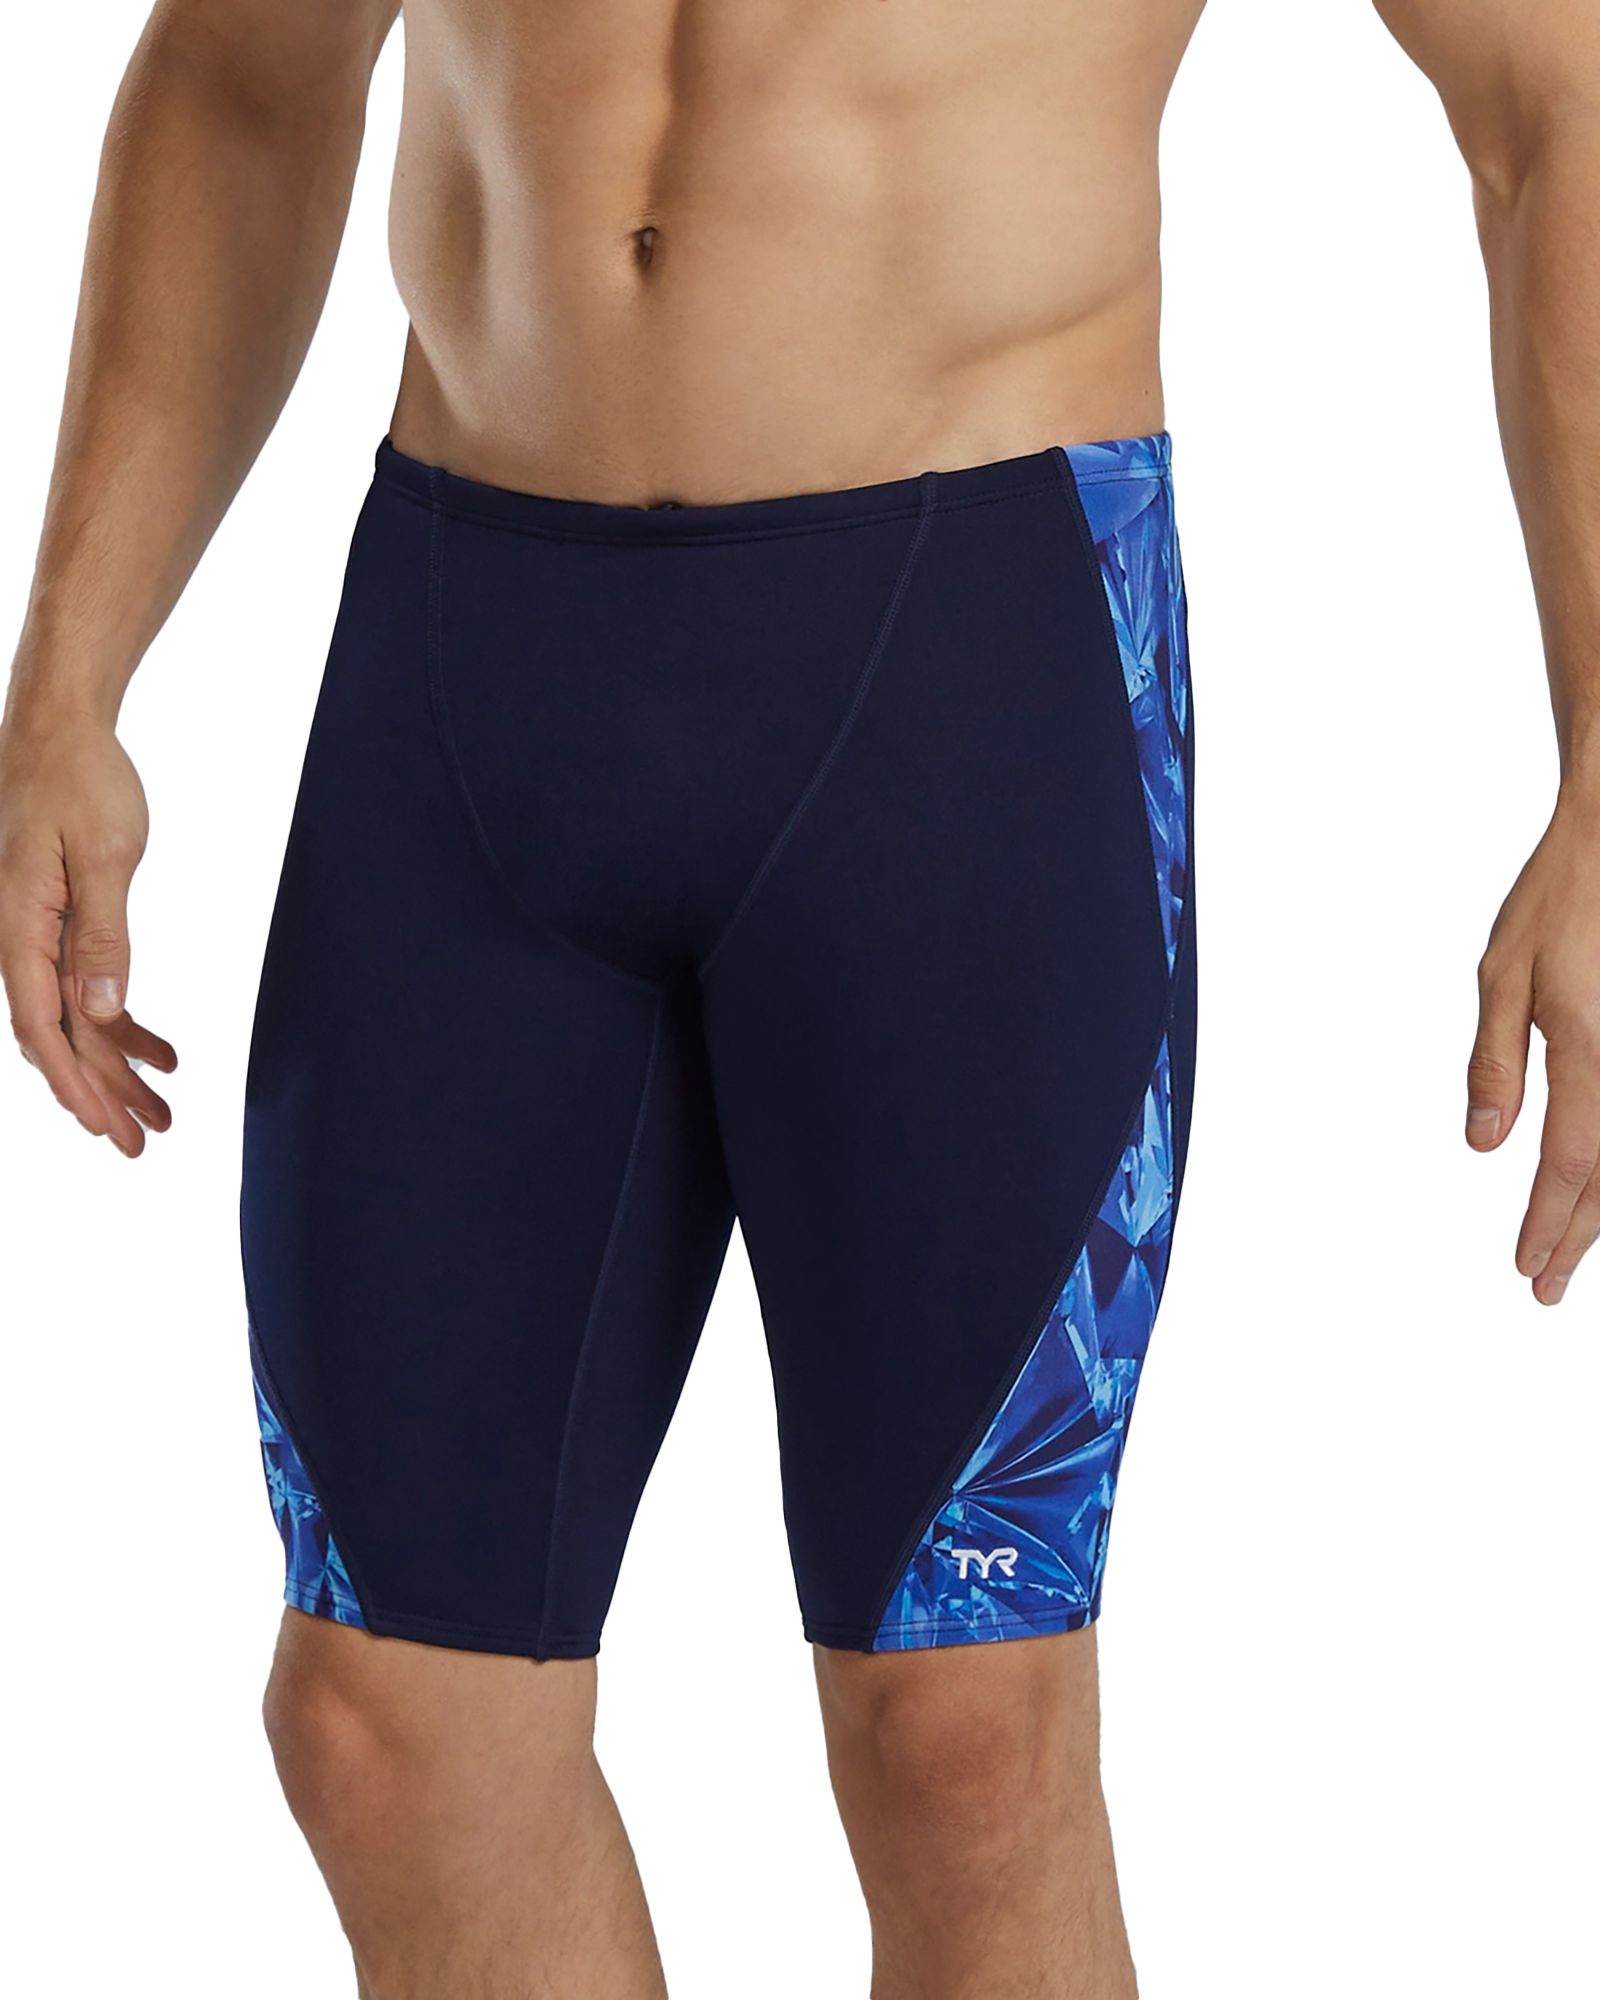 Photos - Swimwear TYR Men's Durafast Eliste Crystalized Jammer Swimsuit, Size 30, Blue 23TYR 